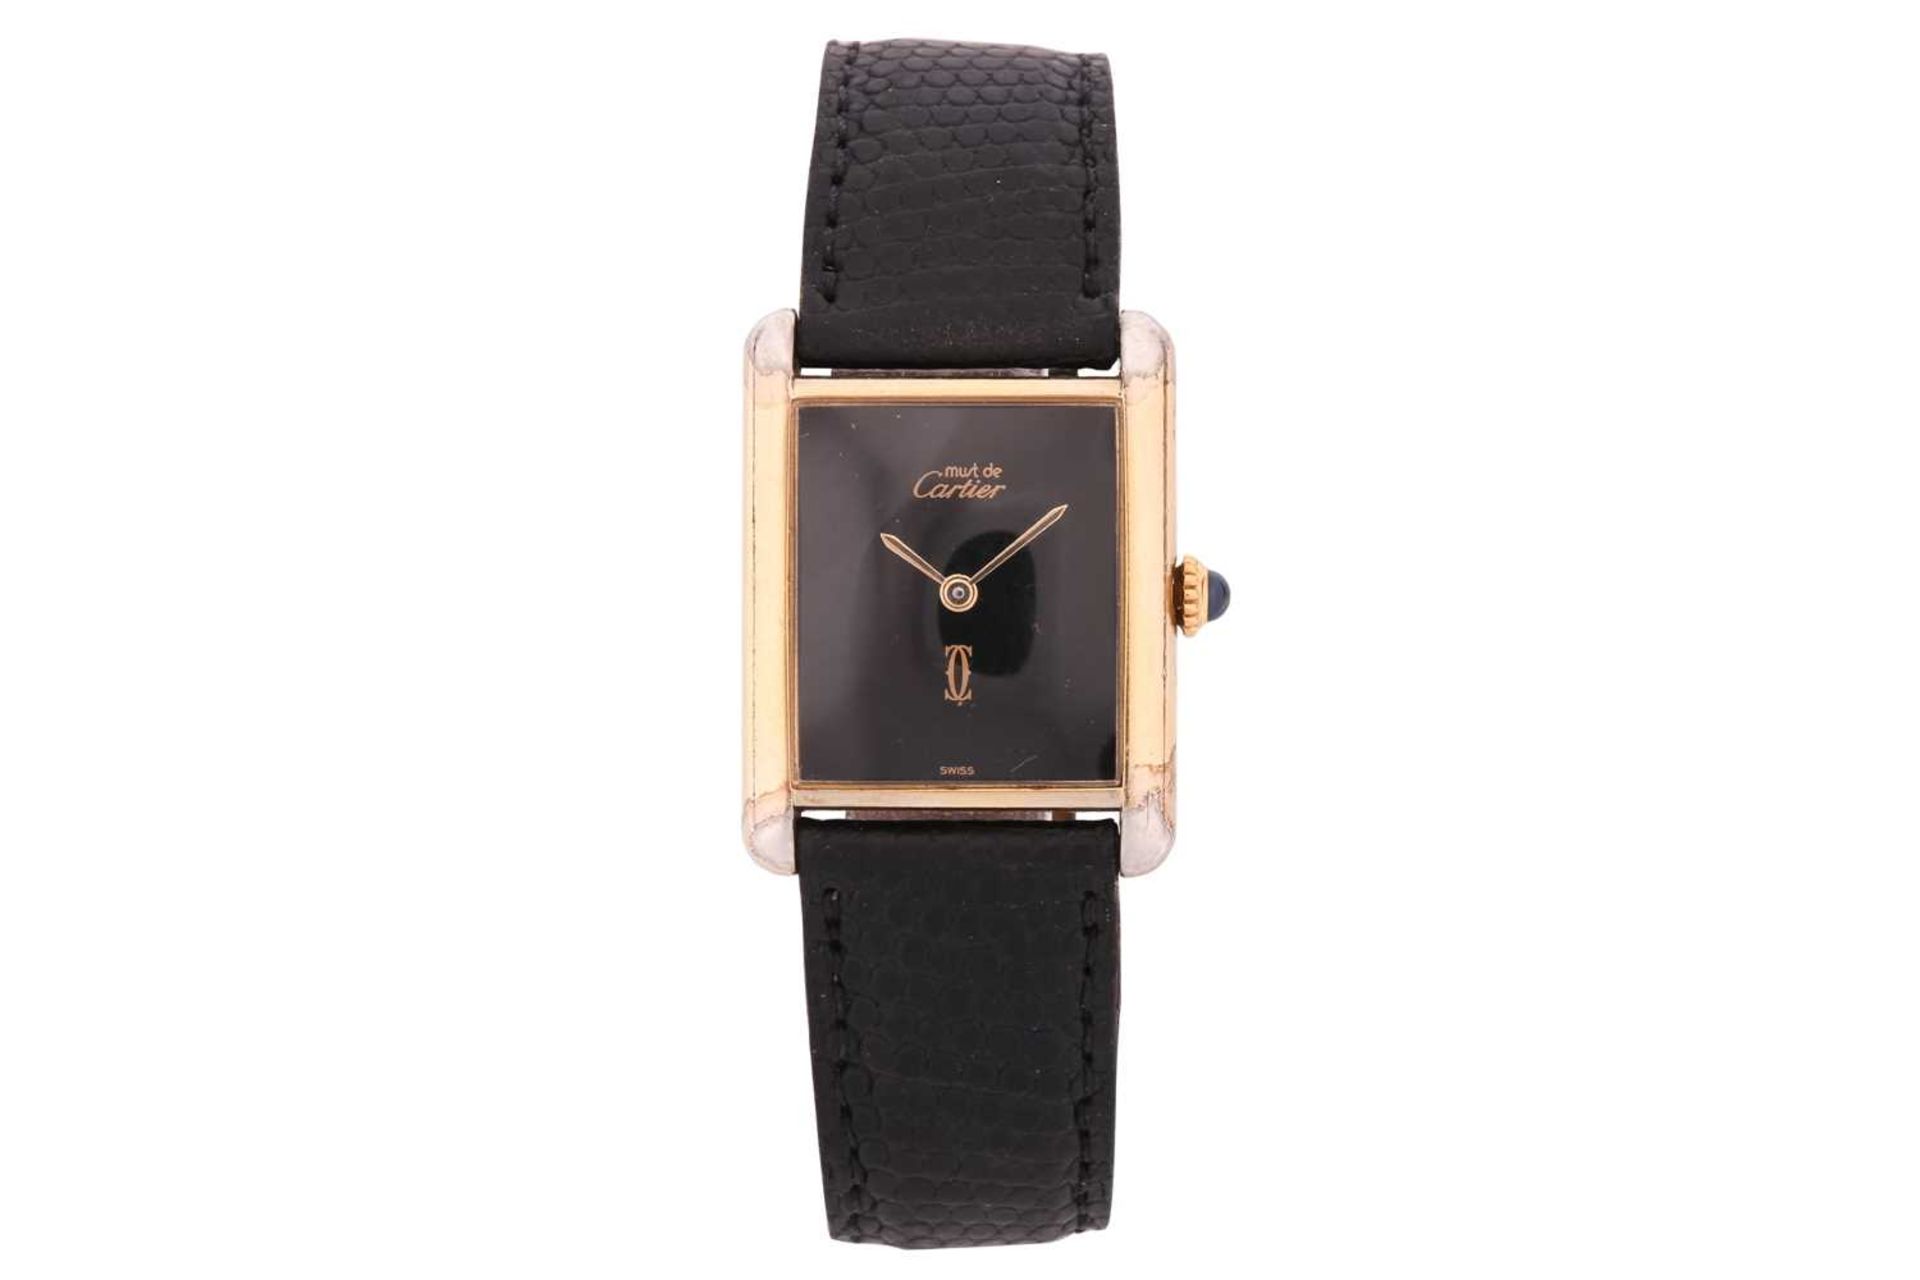 A Must De Cartier silver gilt mechanical watch with a black dial Serial: 6 039295 Case Material: